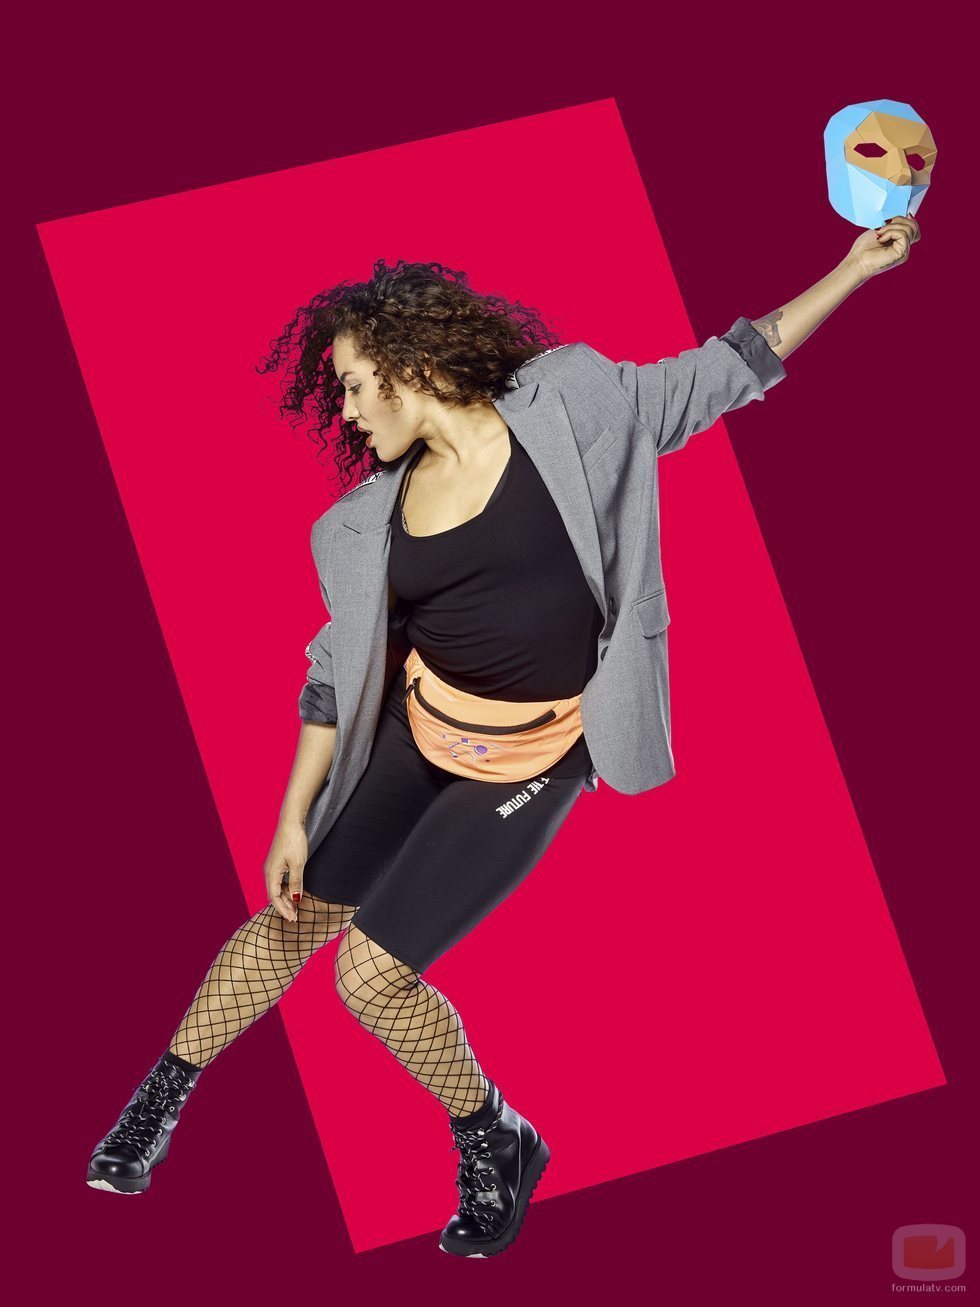 Ruth Prim en un cartel promocional de 'Fama a bailar 2019'